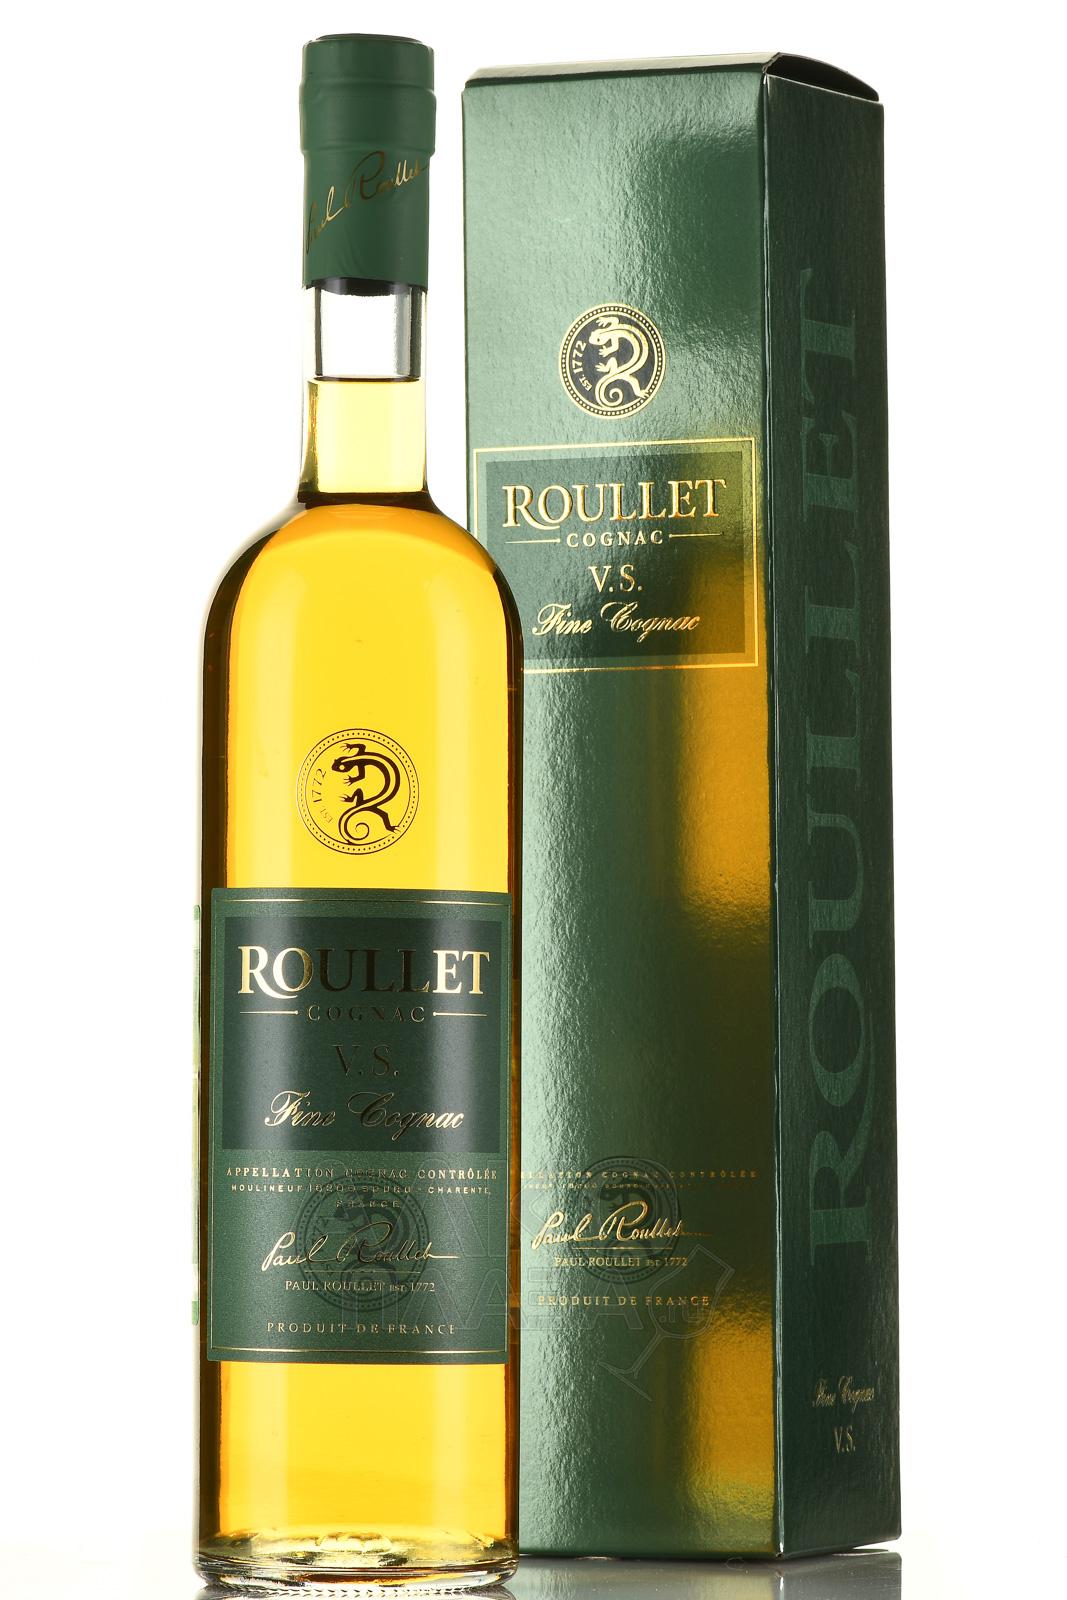 Roullet cognac цена. Коньяк Рулле вс 0.7. Roullet Cognac v.s 0.7. Коньяк Рулле вс 40% 0,7л п/у Франция. Коньяк Roullet v.s 0.5.